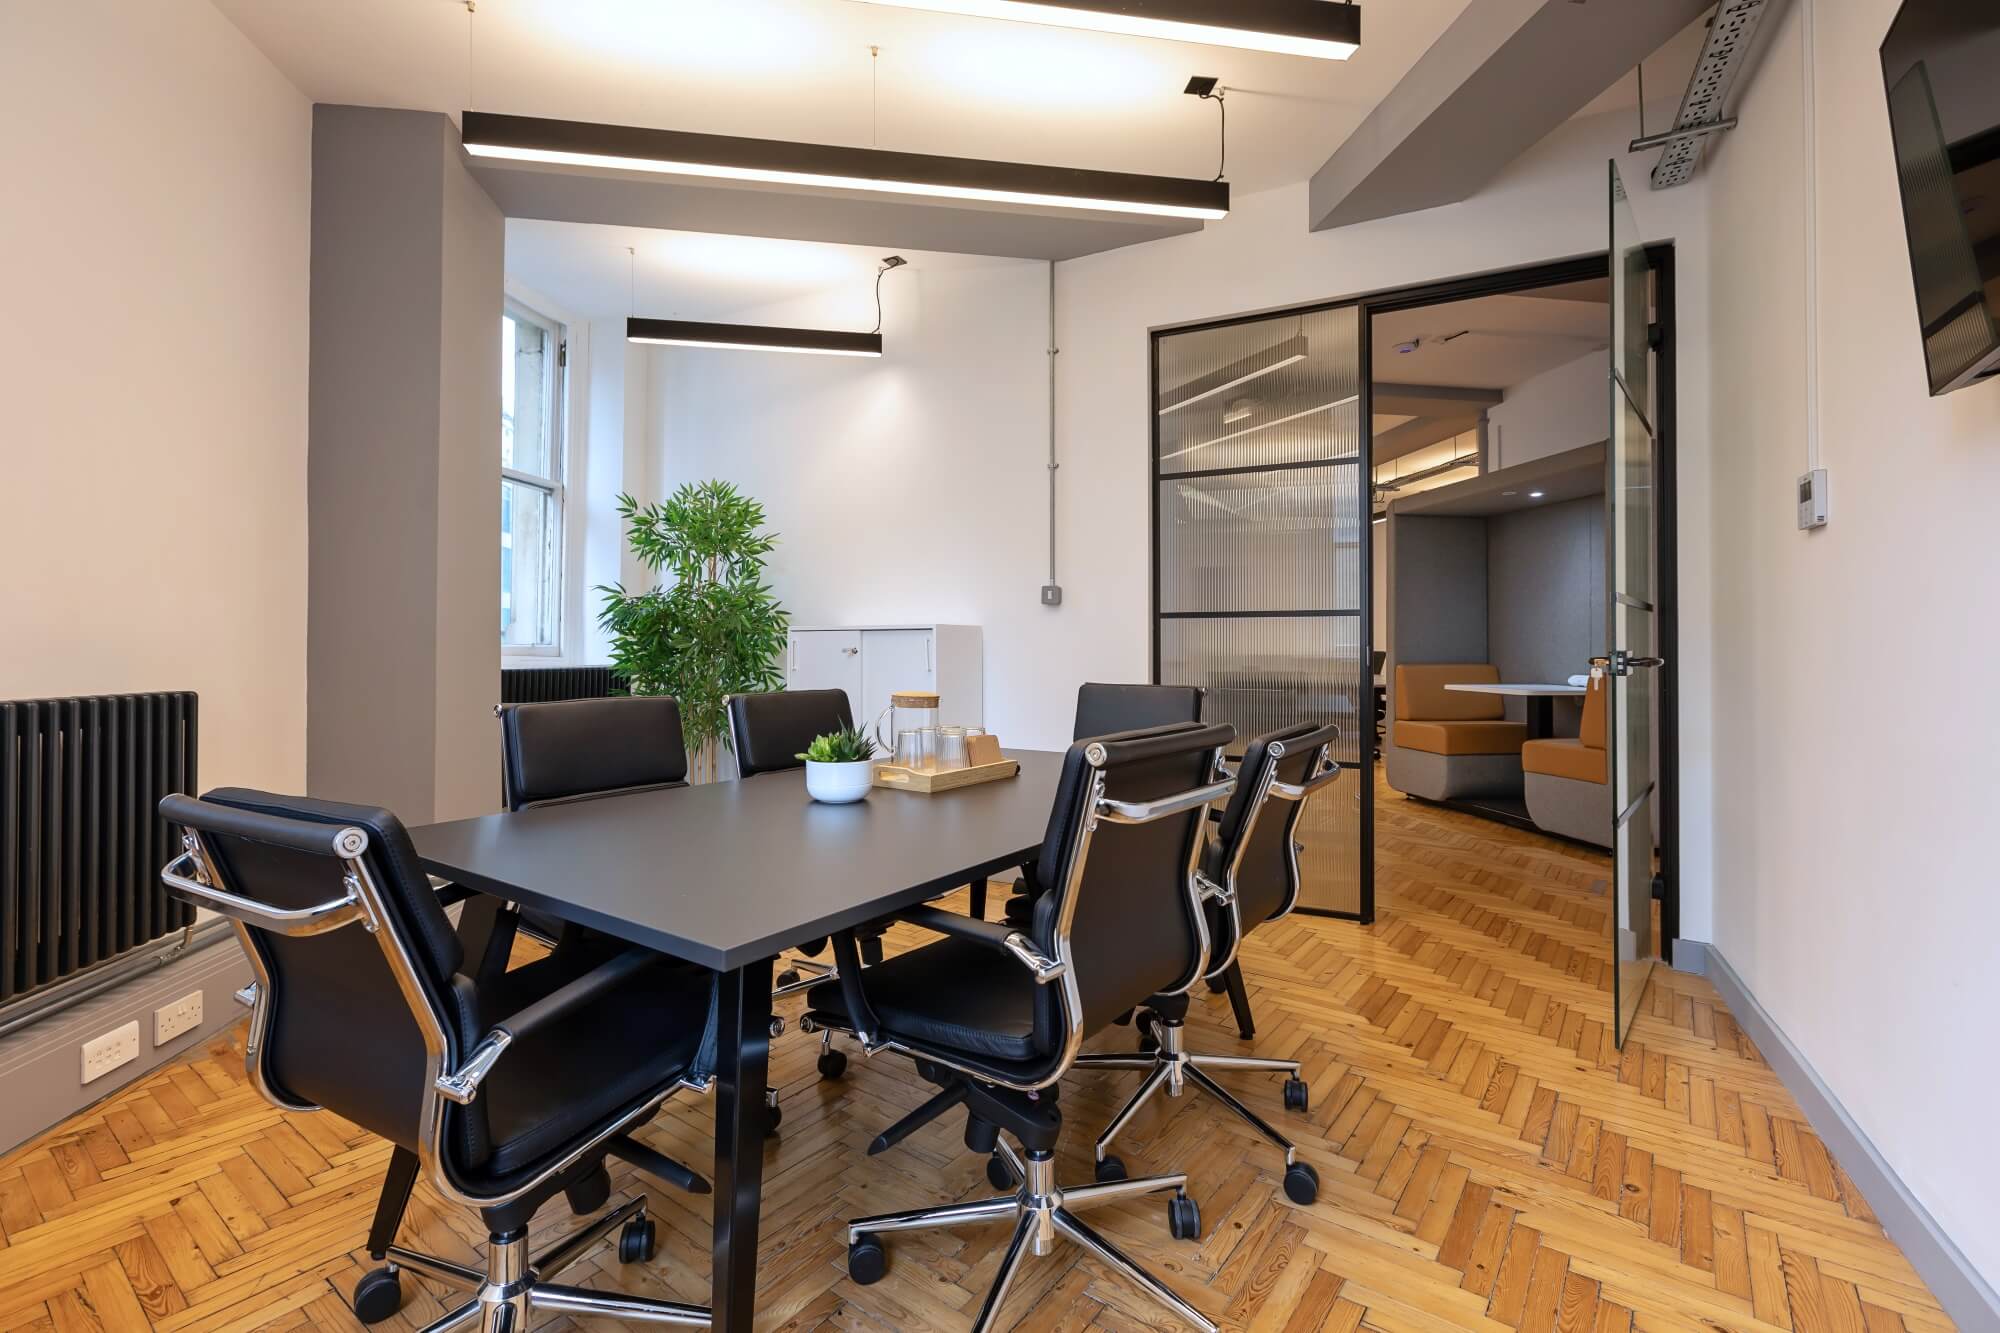 Industrial Style Meeting Room Design